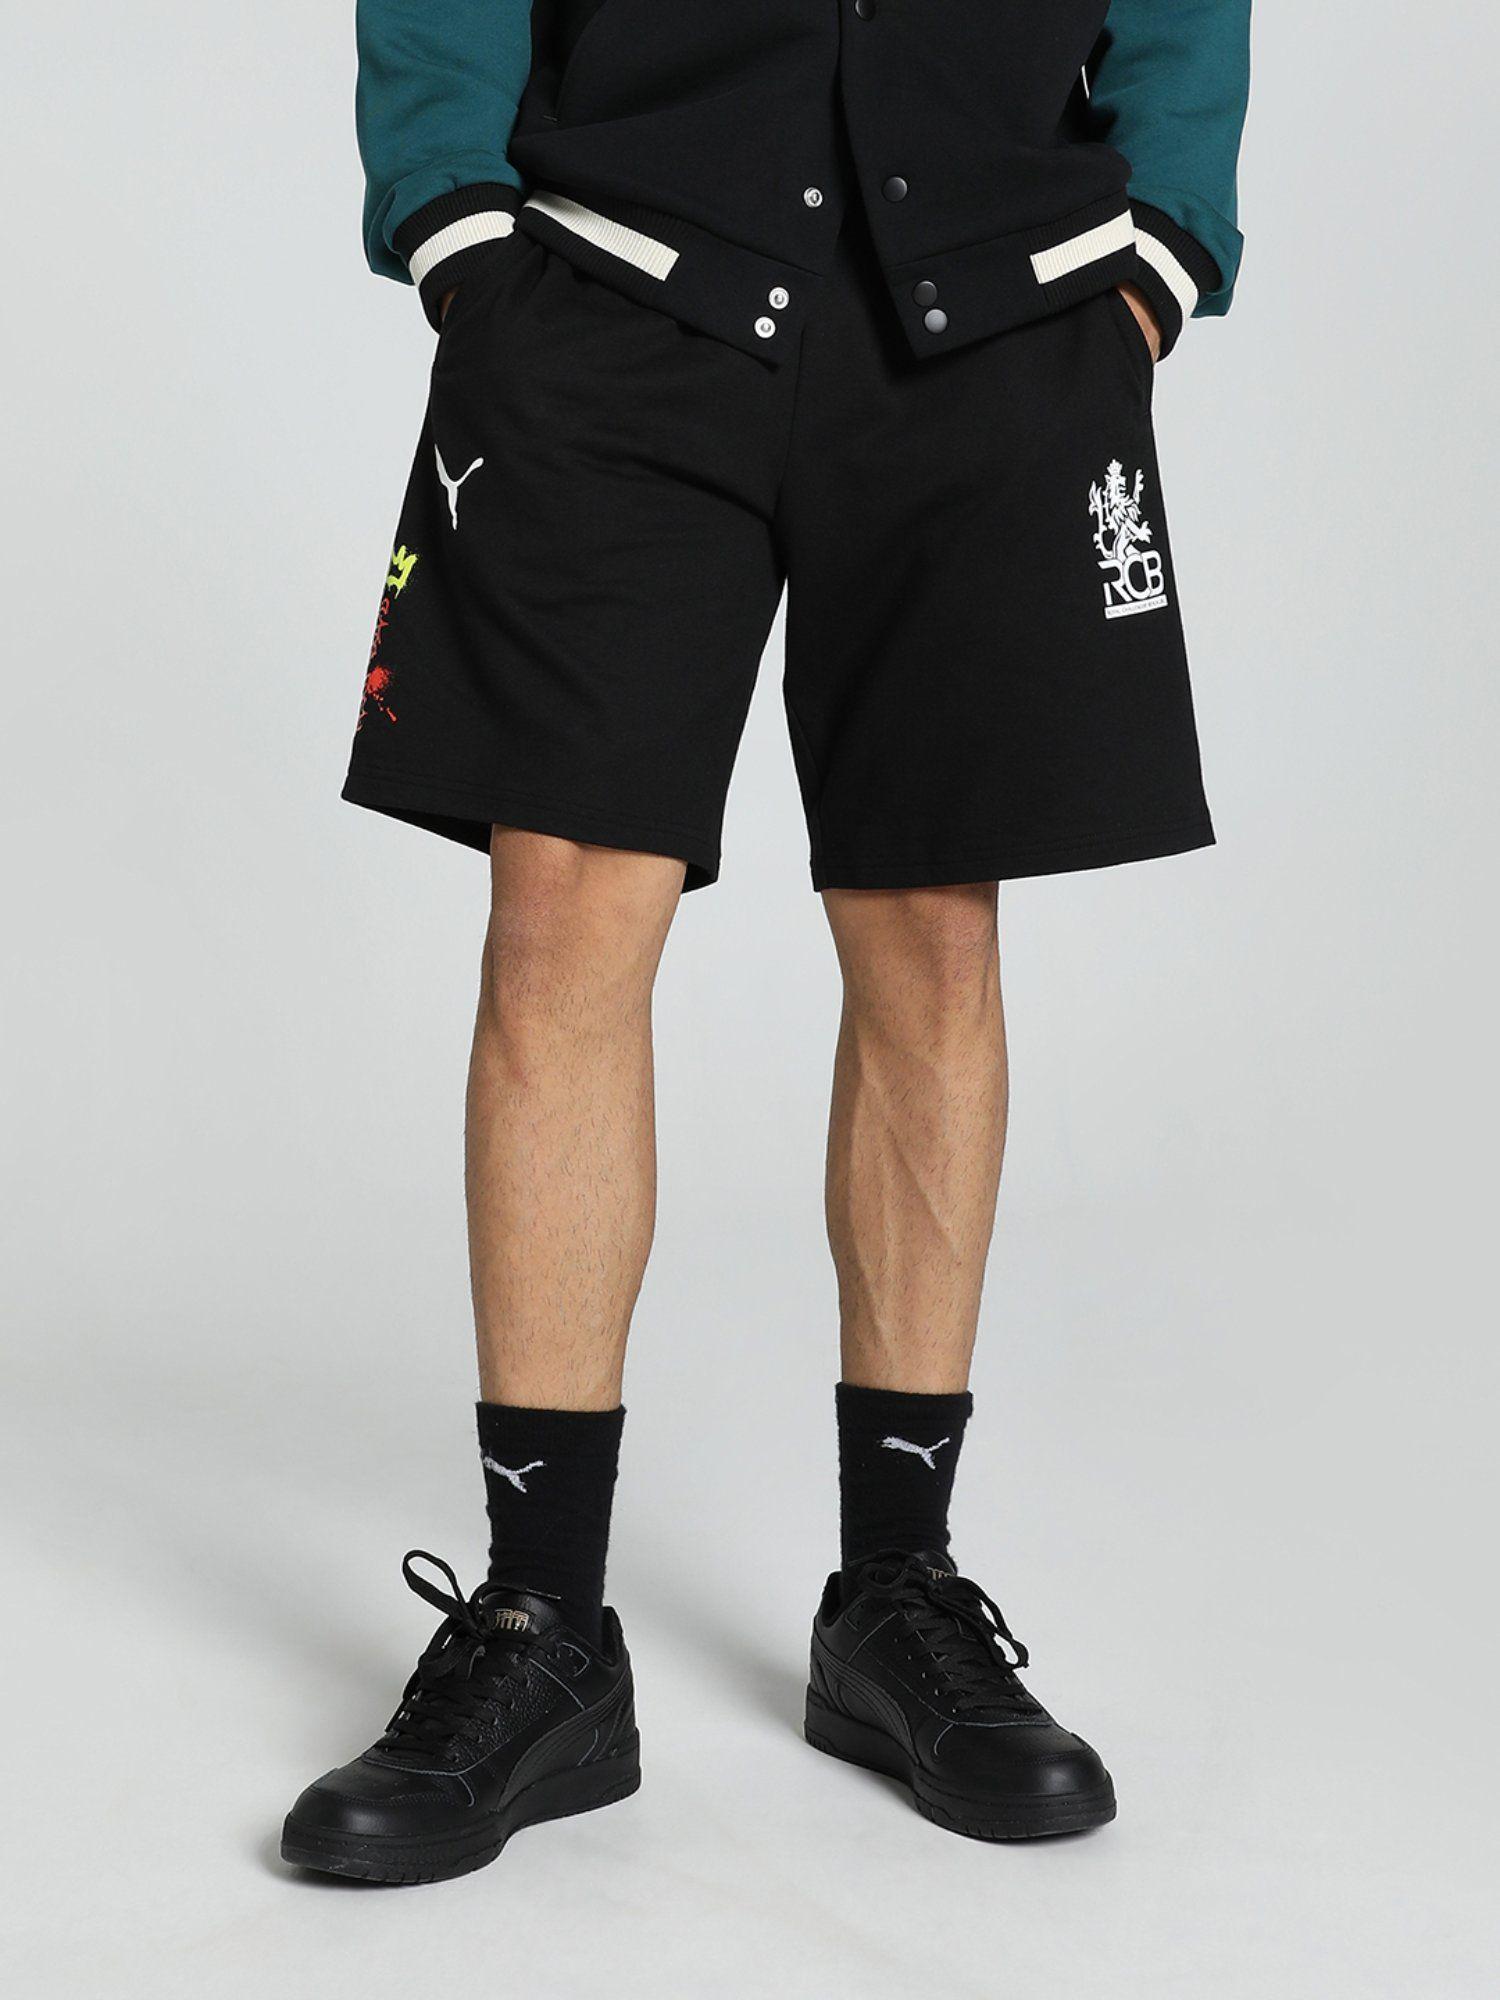 x-rcb-graphic-mens-black-shorts